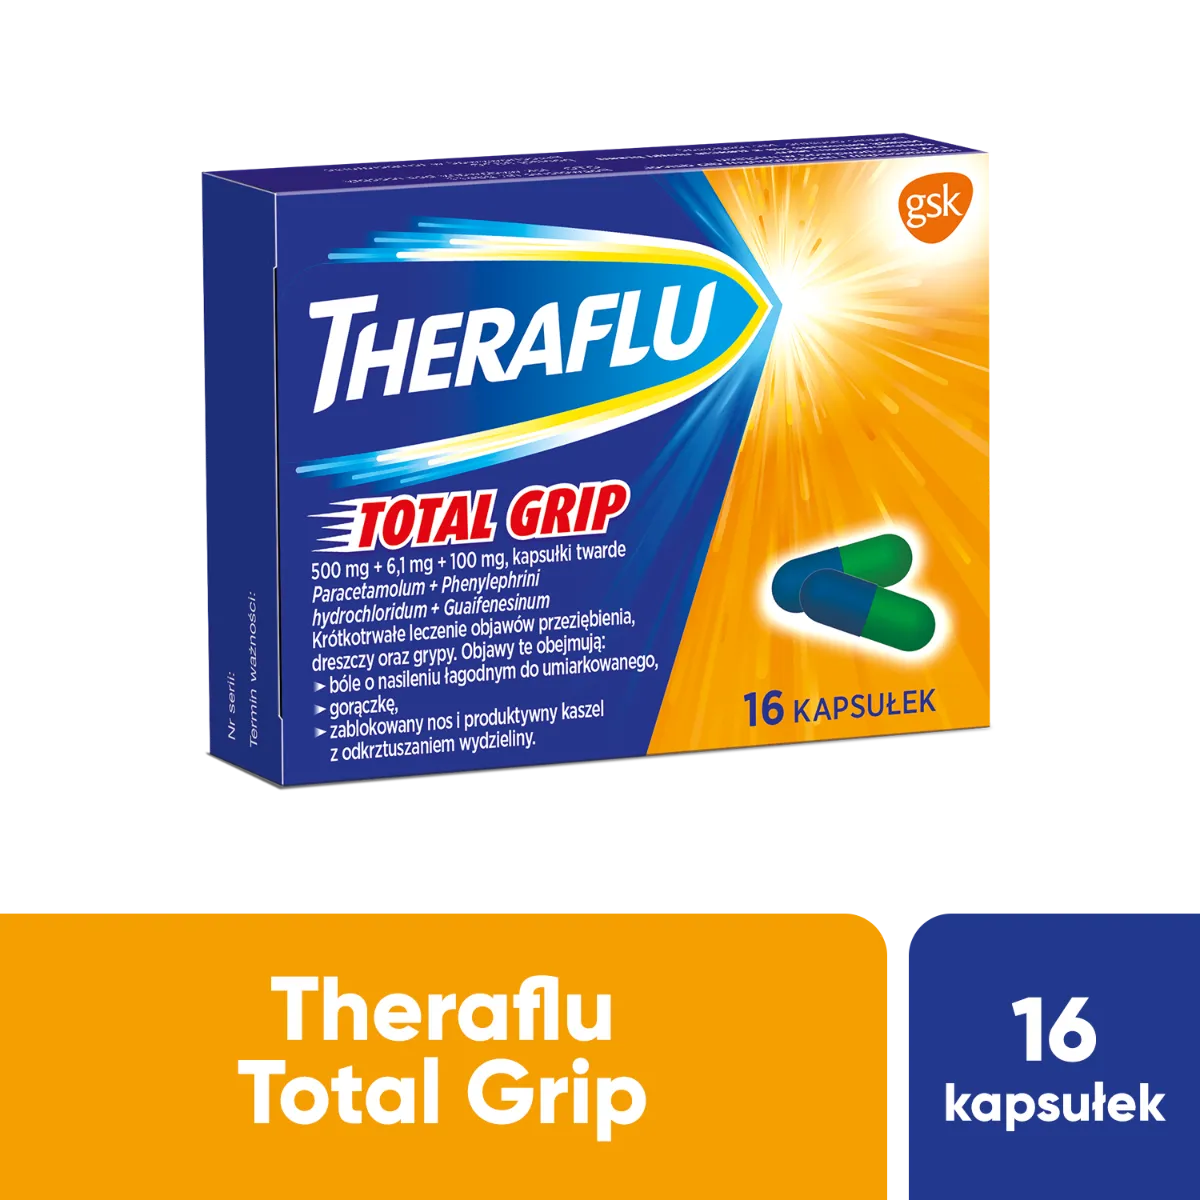 Theraflu Total Grip, 500 mg + 6,1 mg + 100 mg, 16 kapsułek